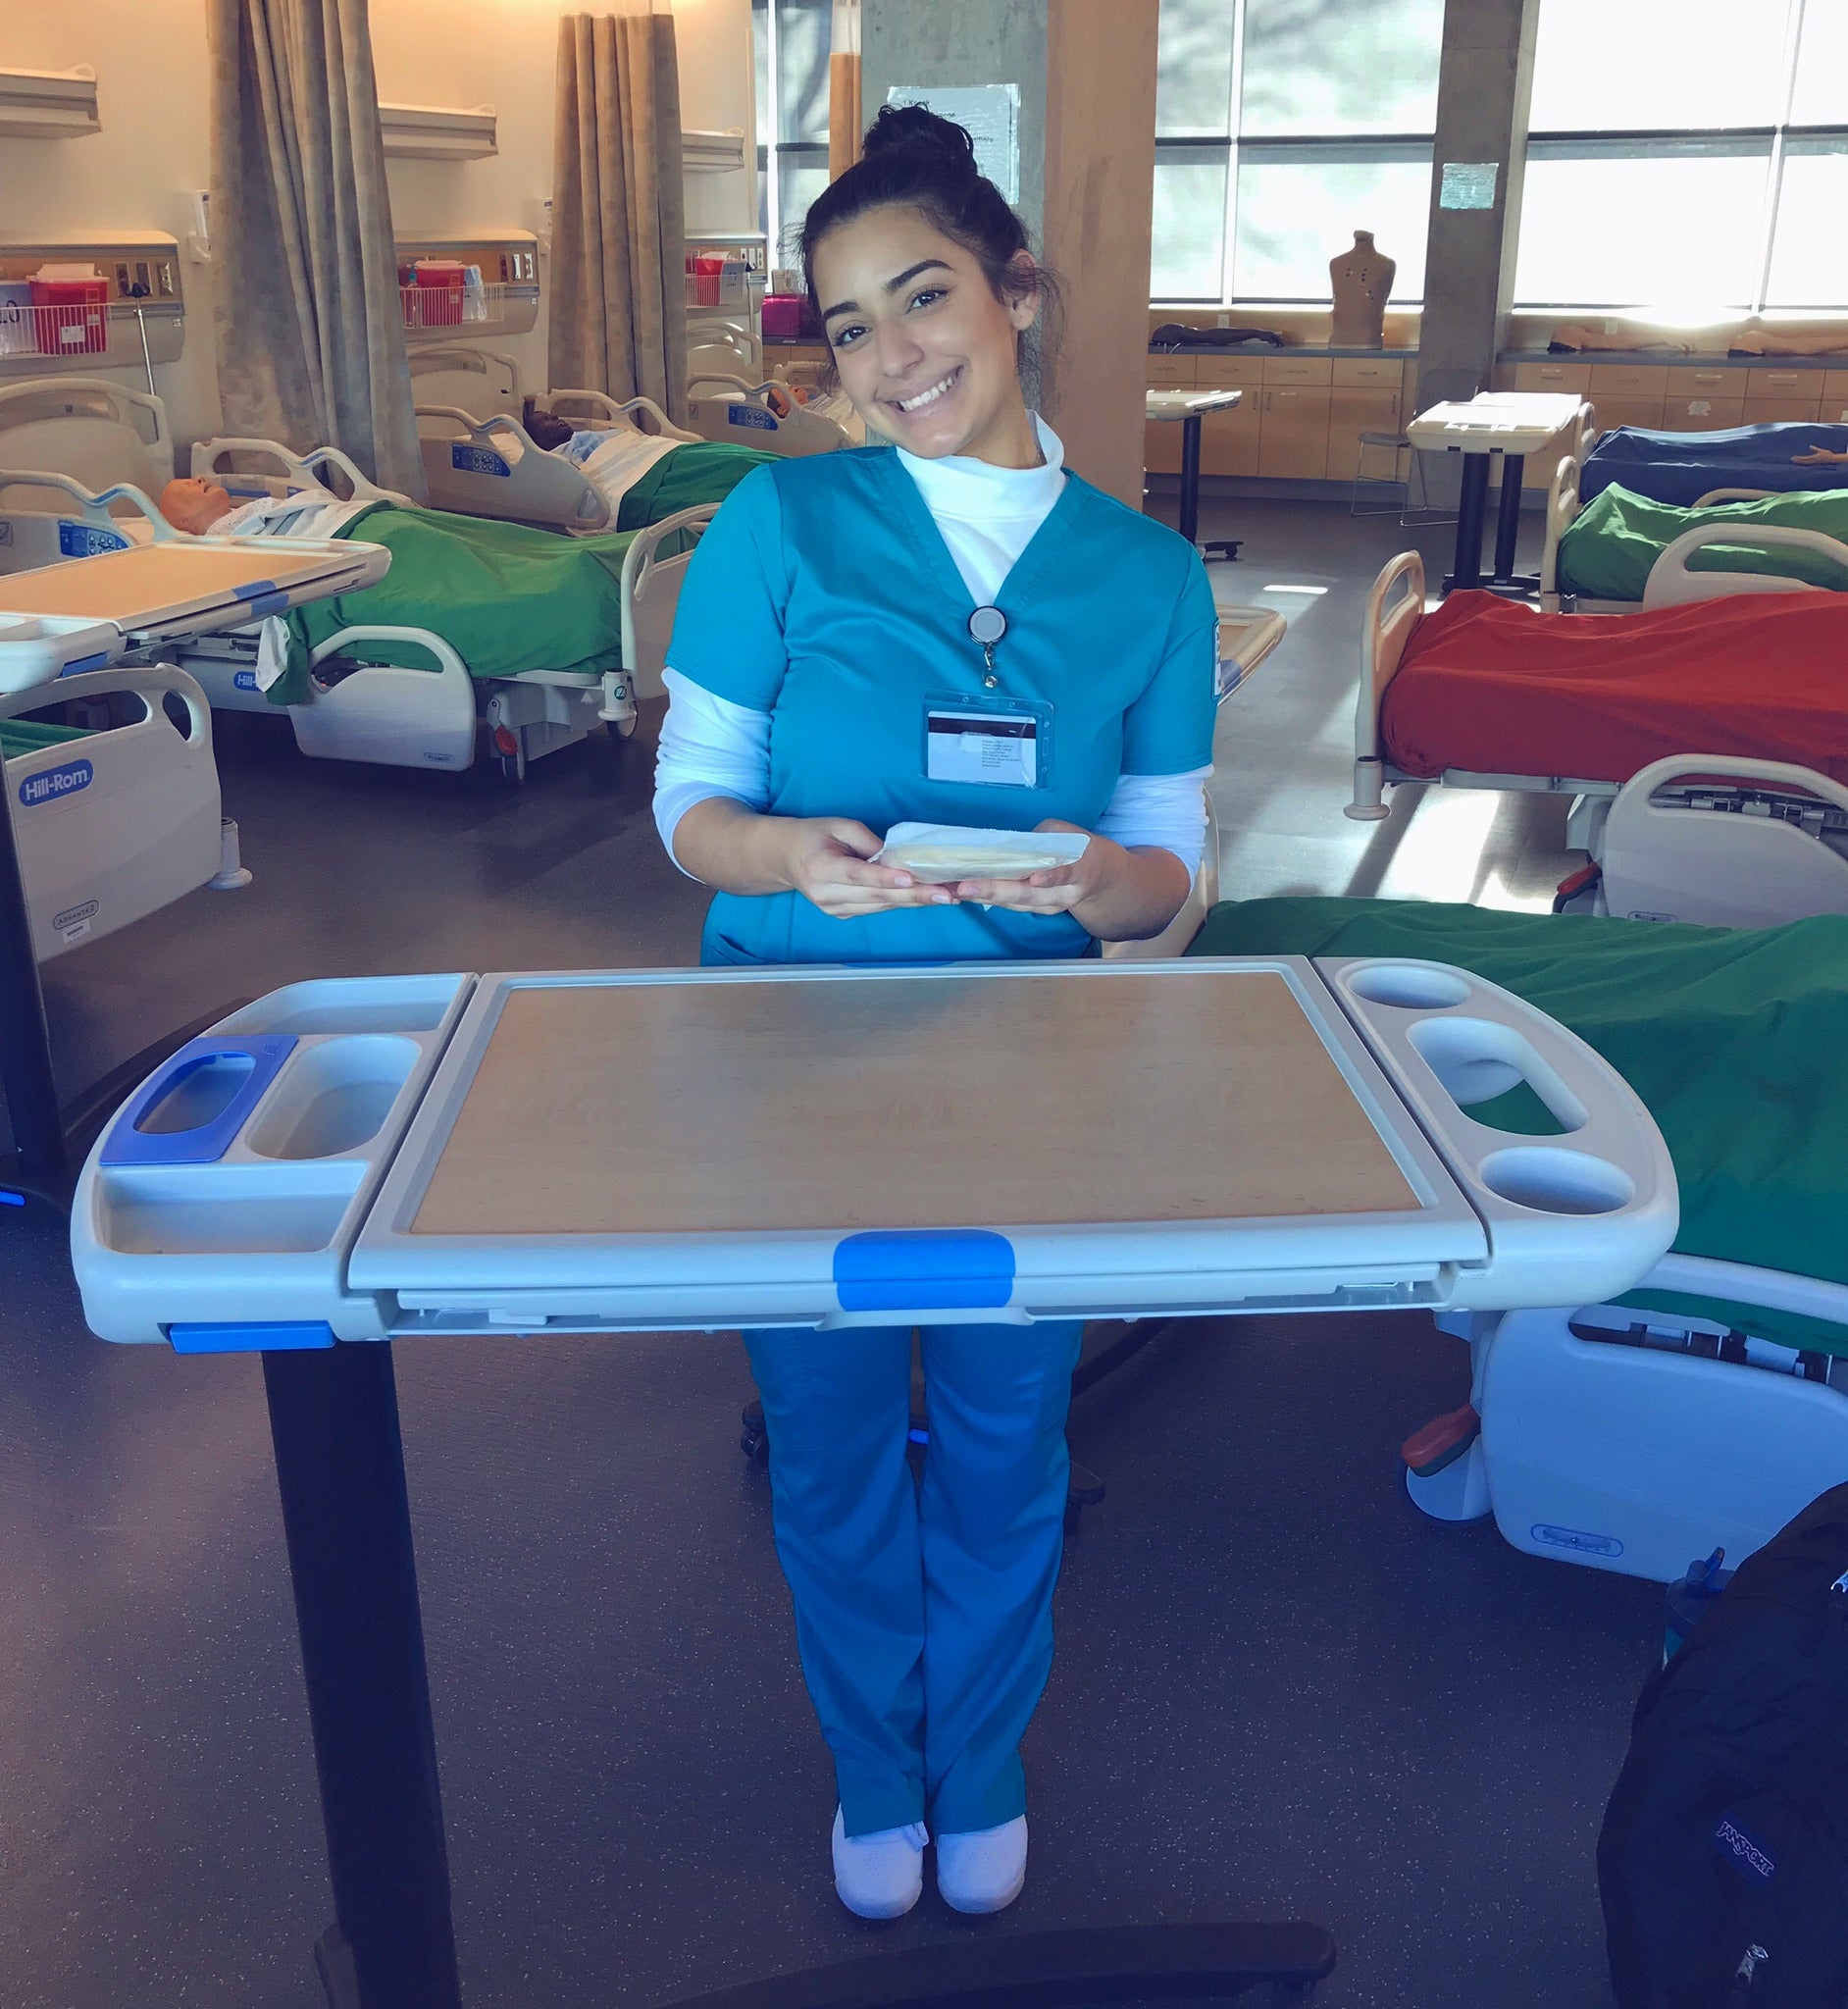 Jackie Blandon Nurse threadTalk Blog Feature Wearing Scrubs